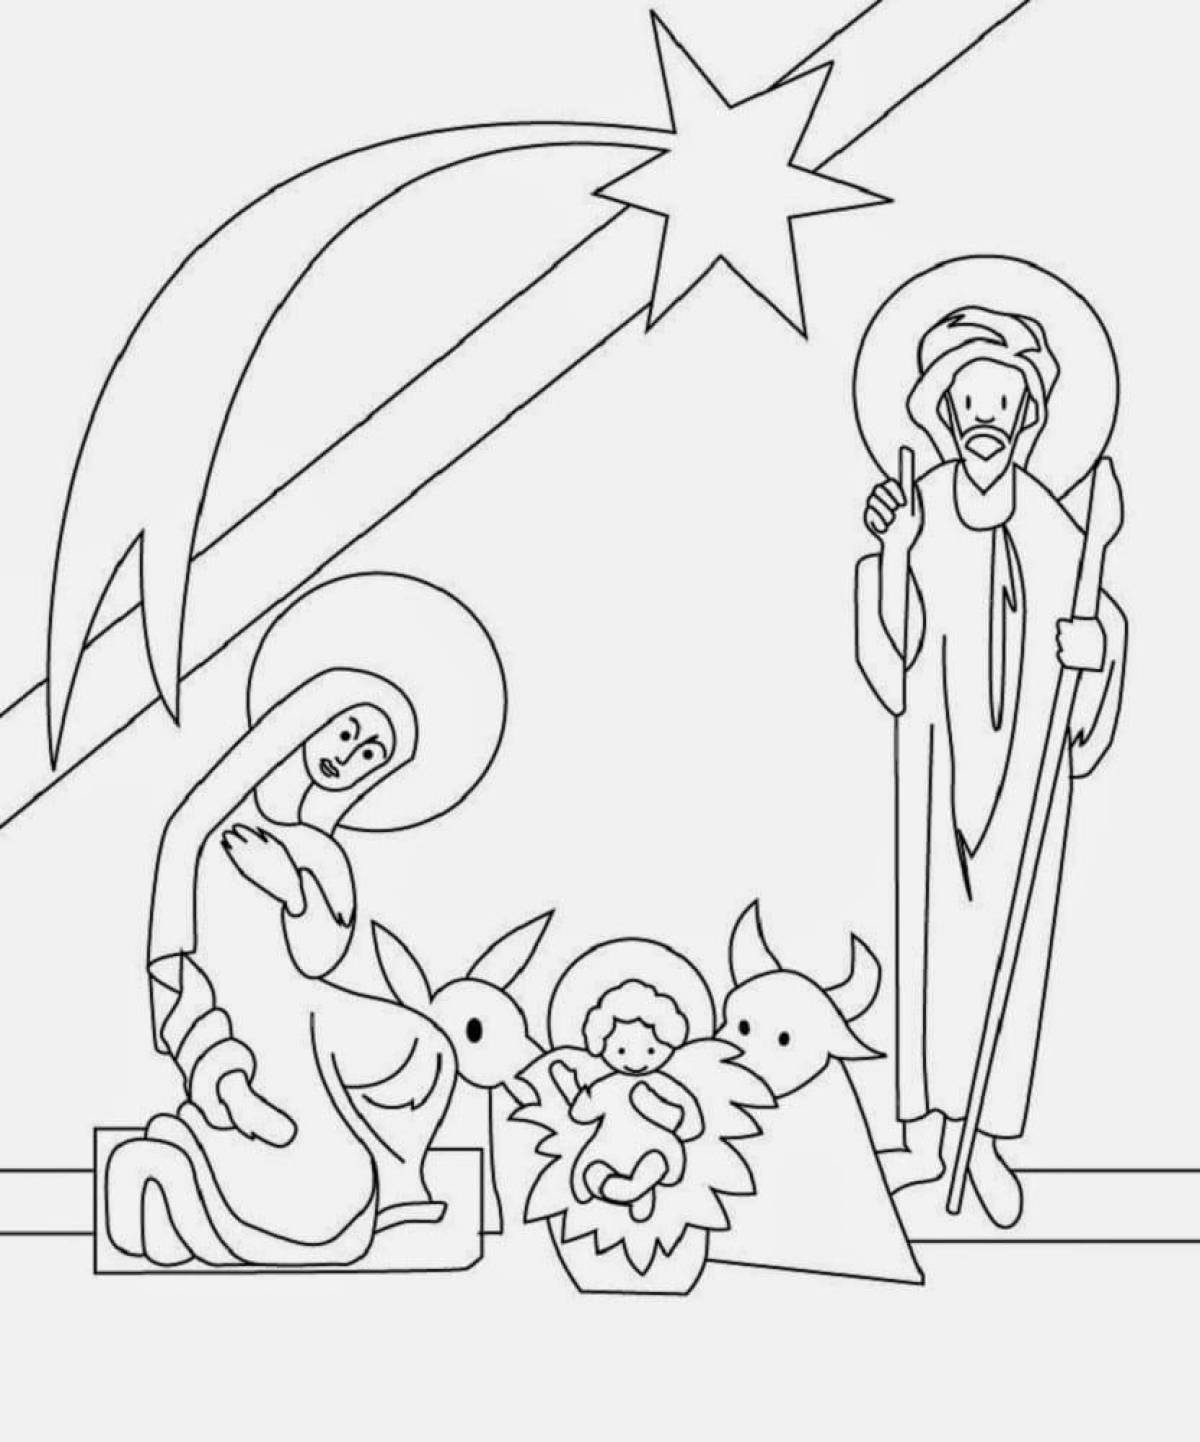 Charming nativity scene coloring book